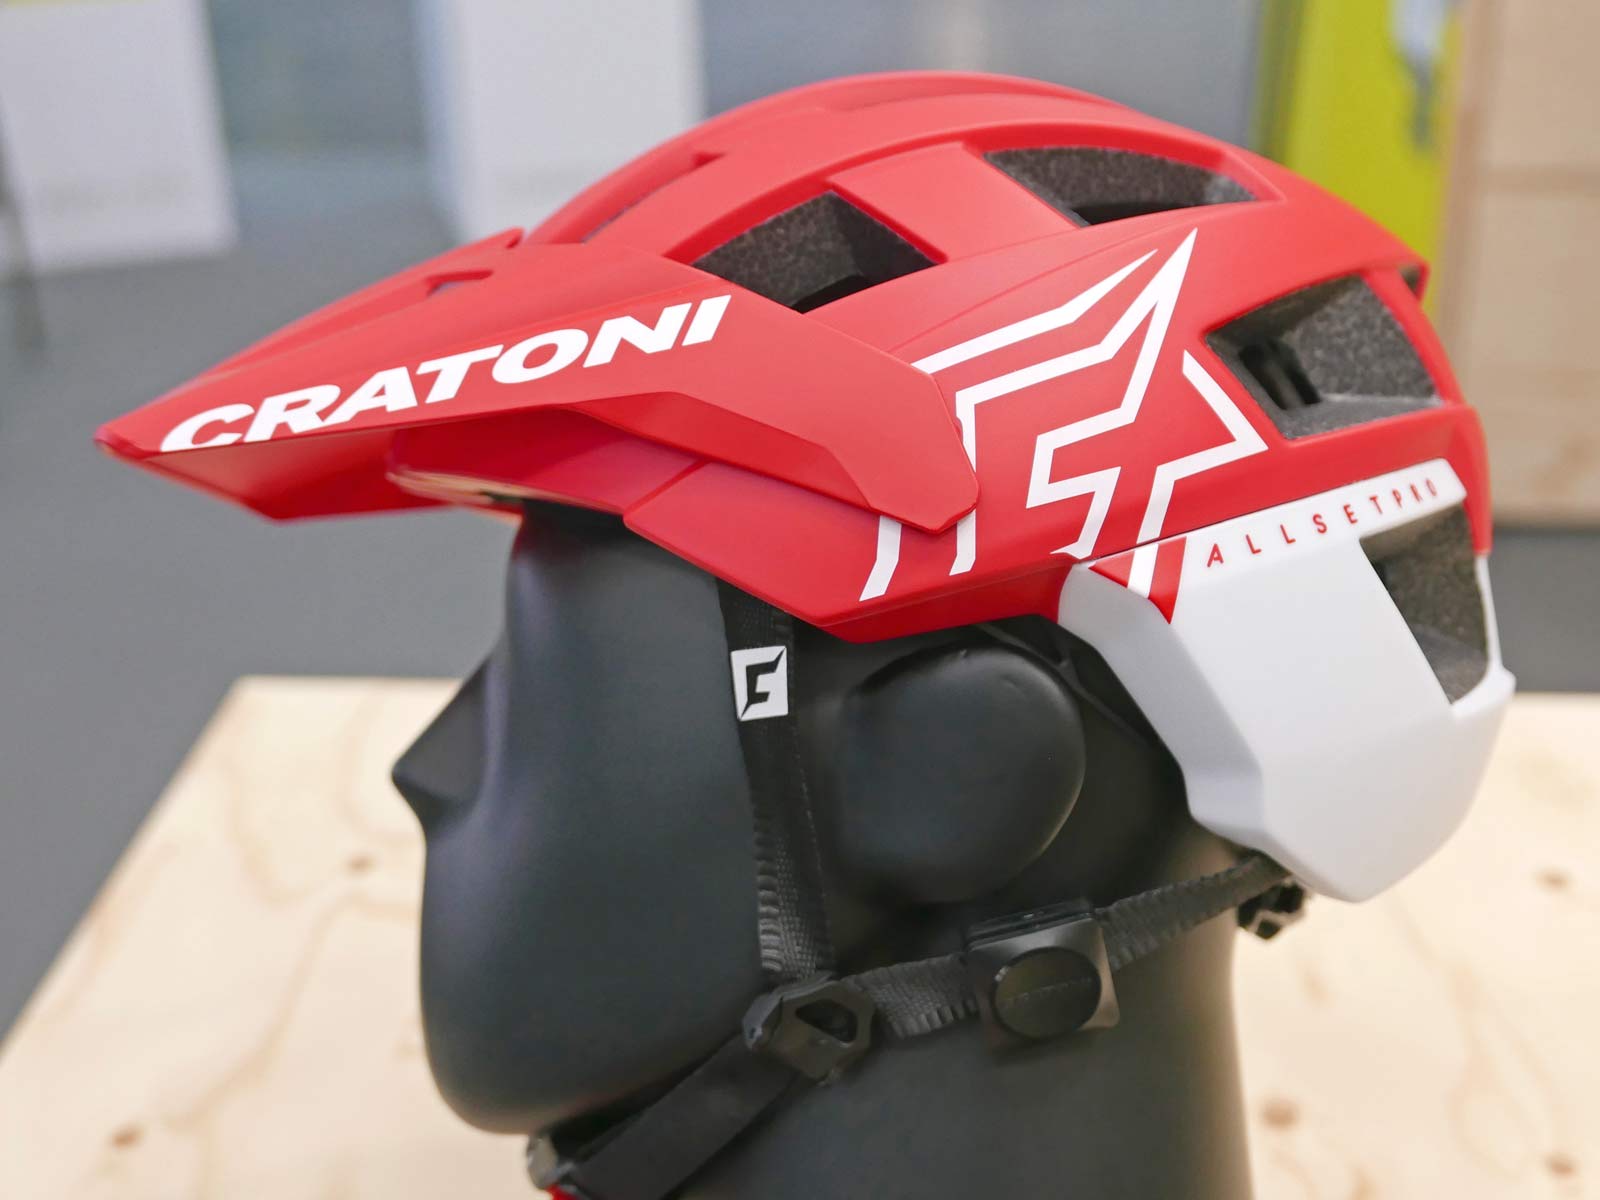 Cratoni C-Safe crash sensor, add-on impact detection safety upgrade for any helmet, on Allset Pro